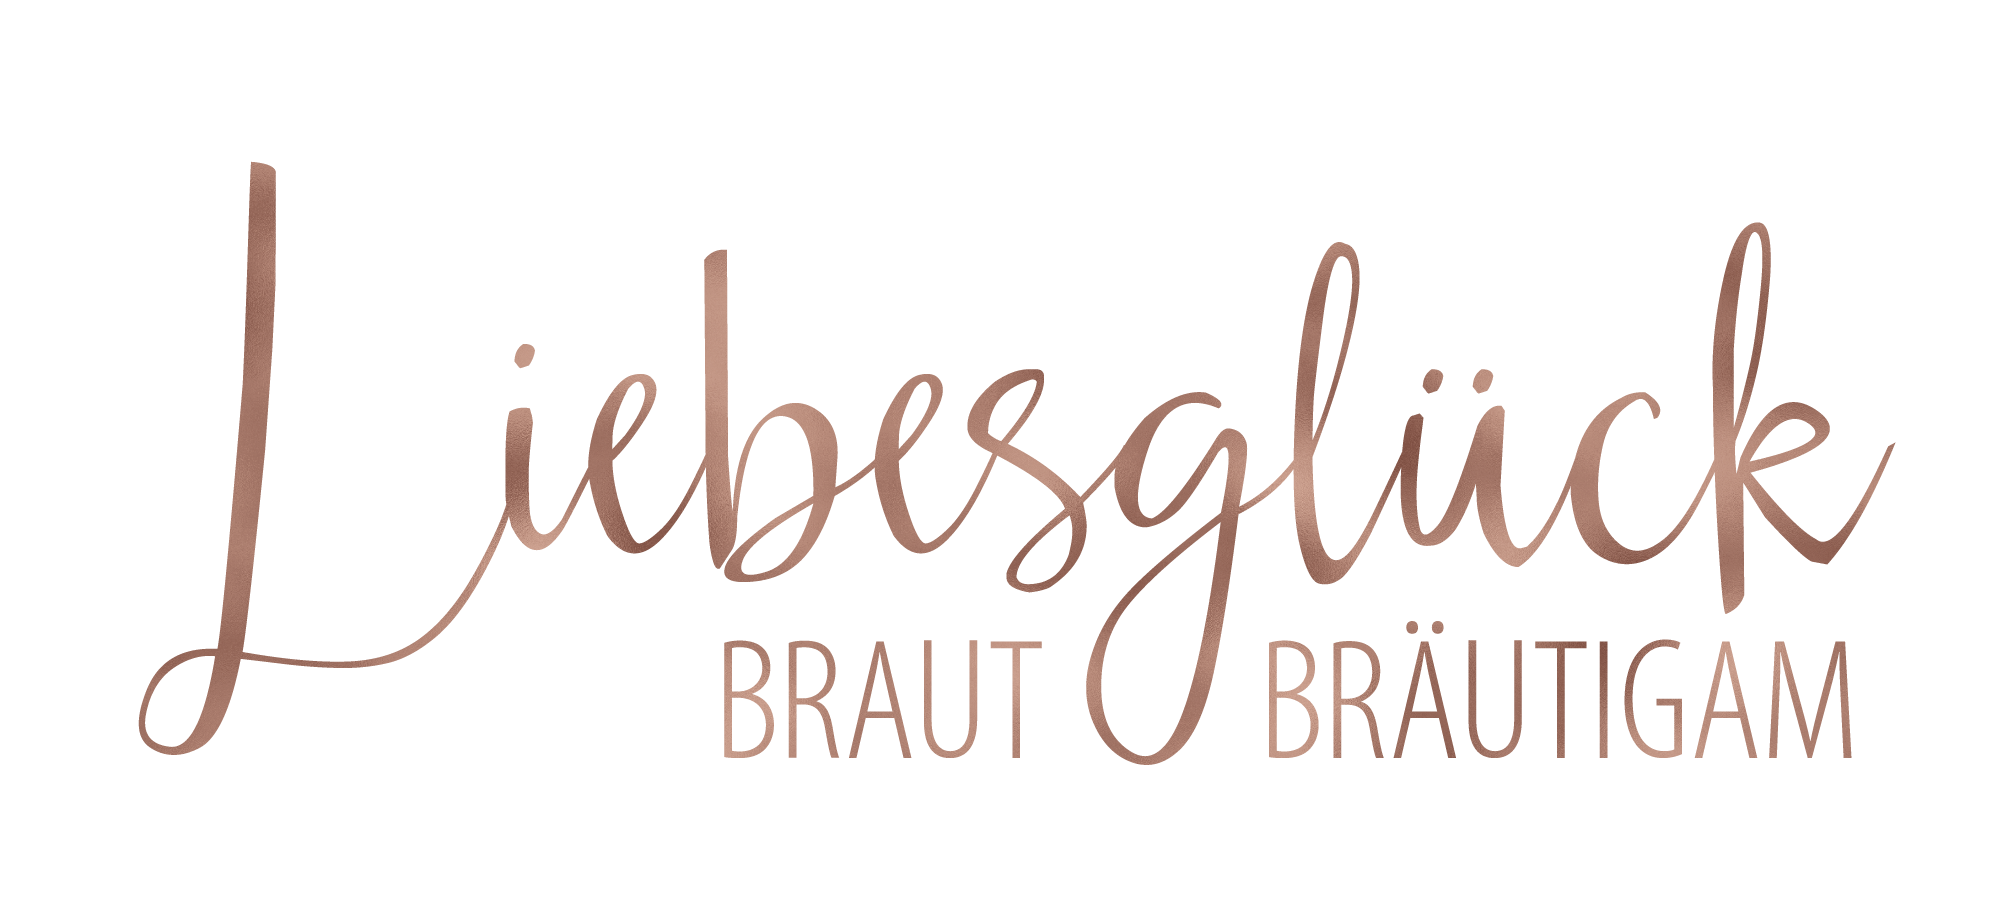 Liebesglück – Braut & Bräutigam | Würzburg